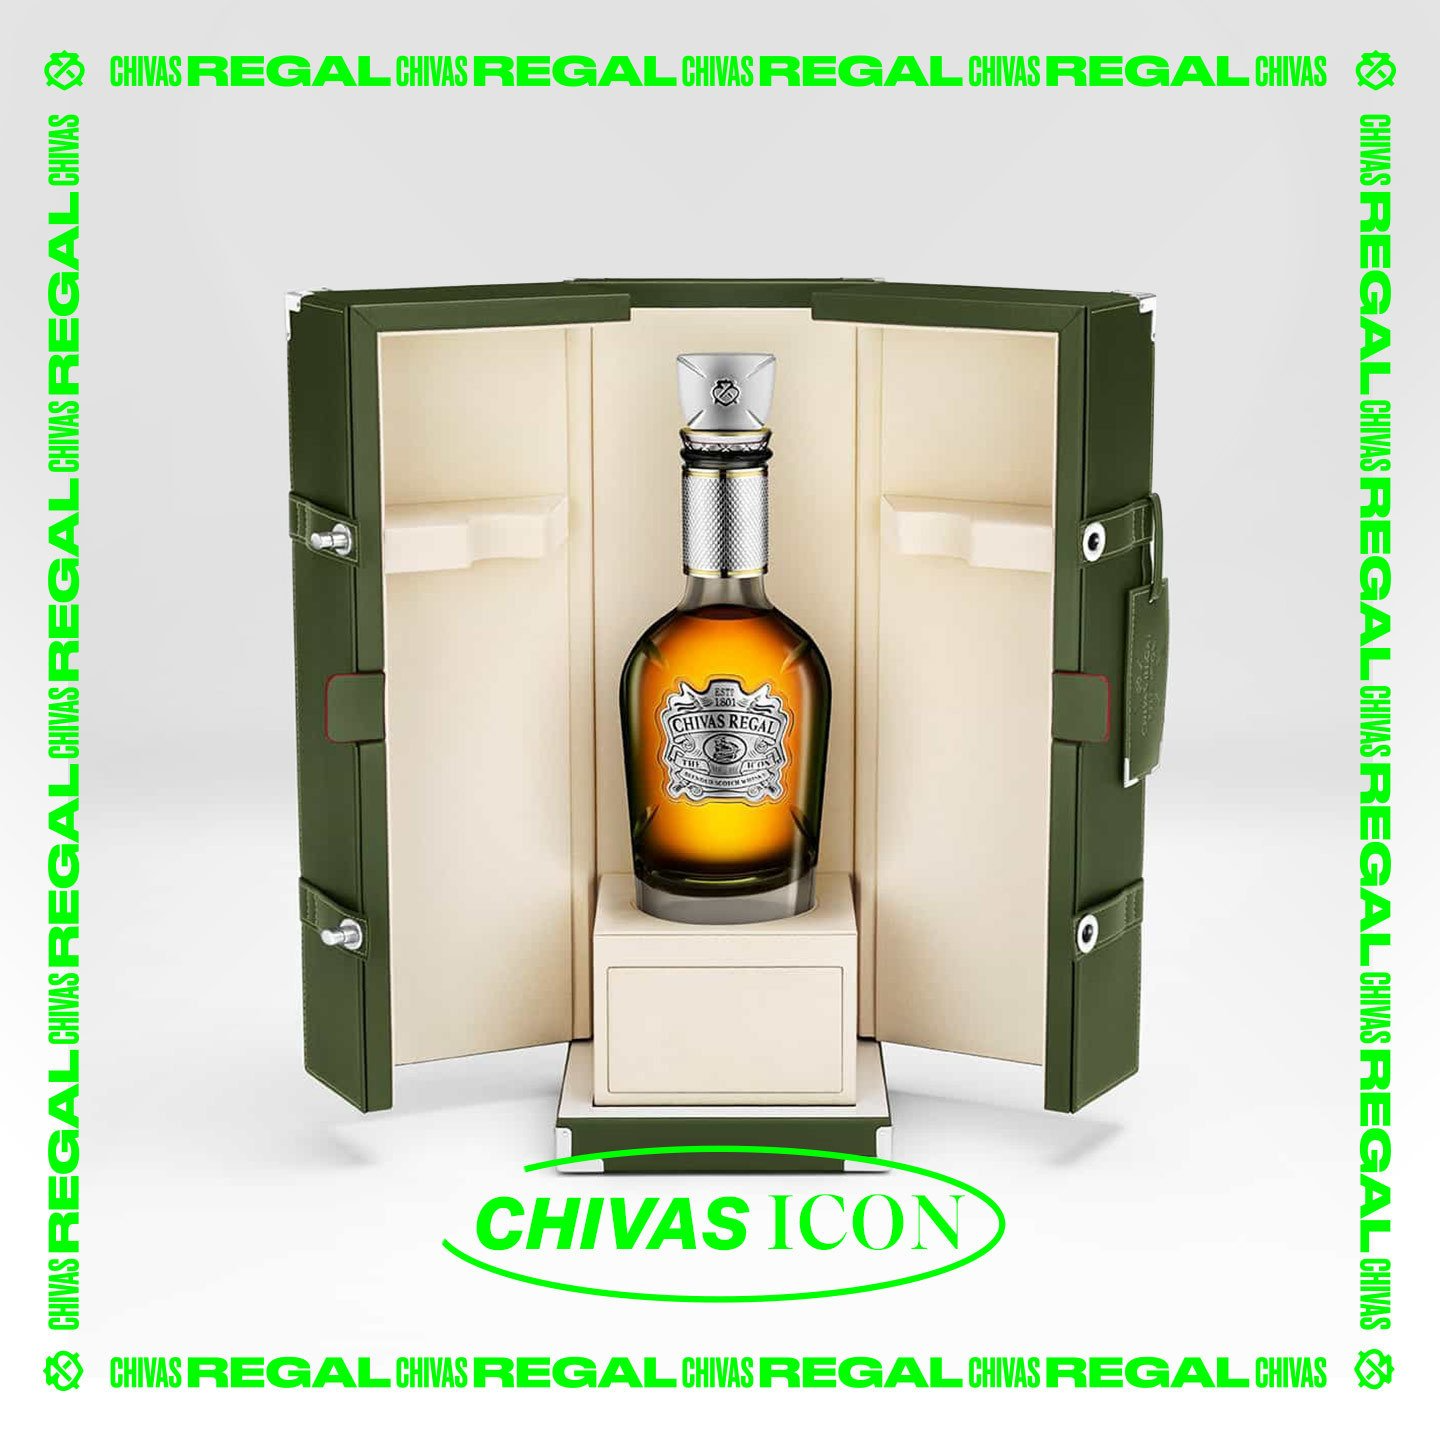 Chivas Regal The Icon Scotch Whisky 700ml